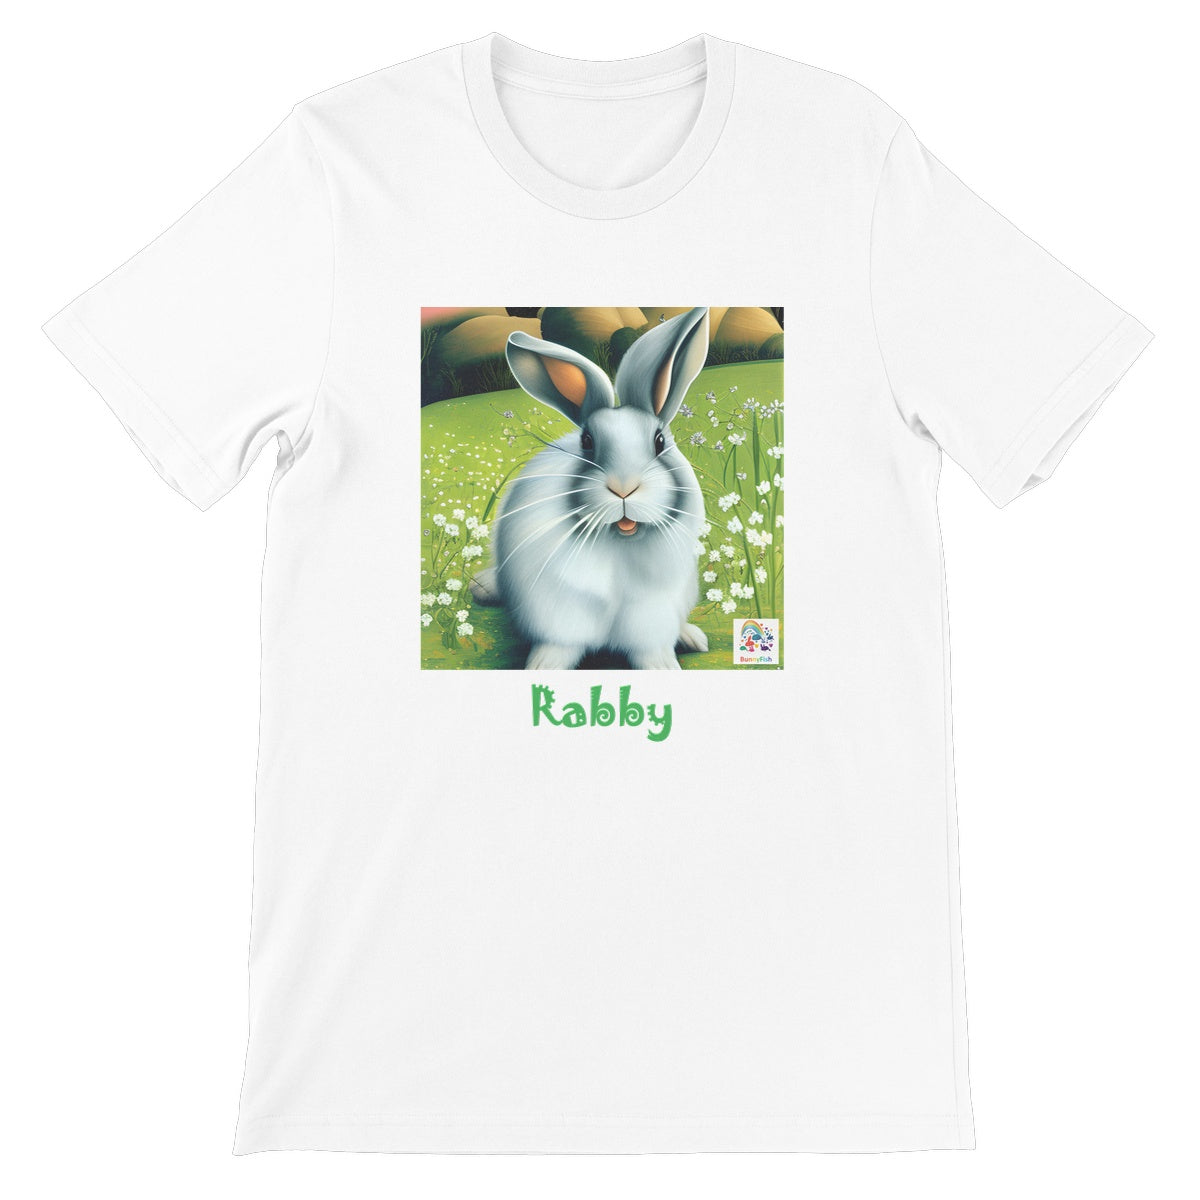 Rabby Grownups' T-Shirt